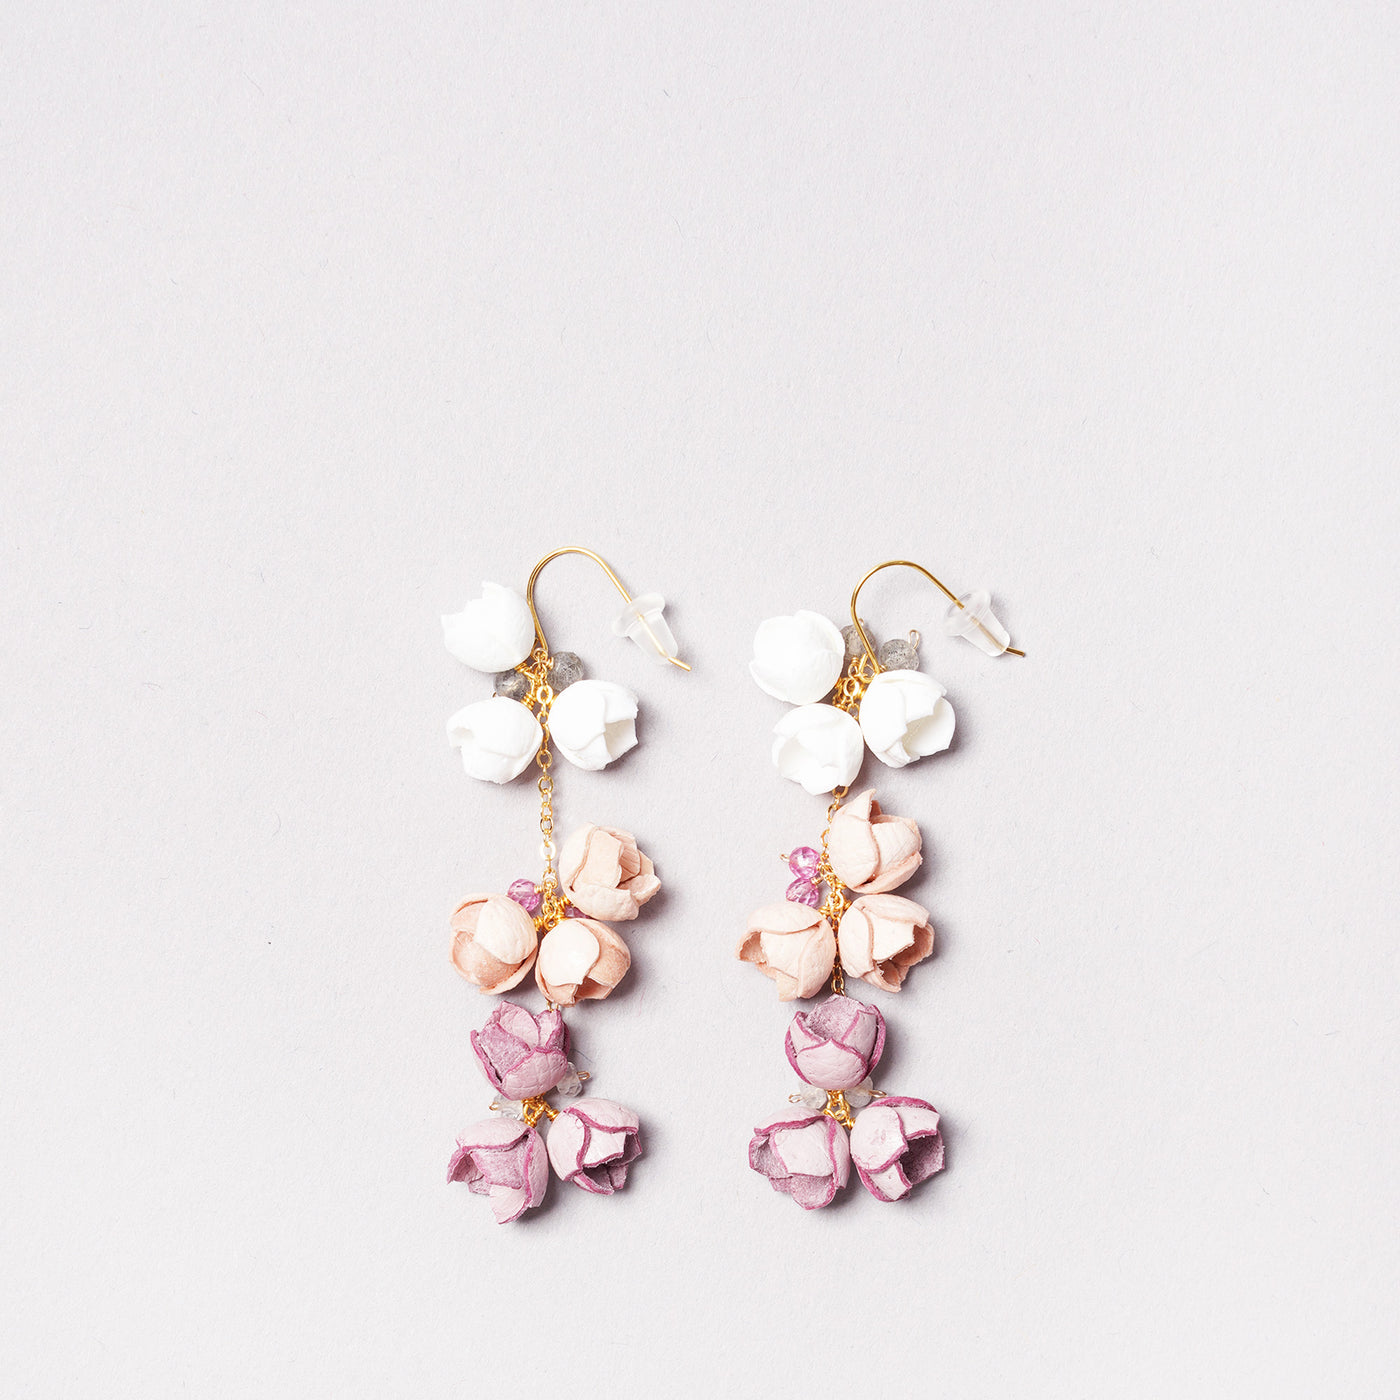 <Selieu> MIZUKI Earrings / White, Cherry Blossom and Smoky Pink